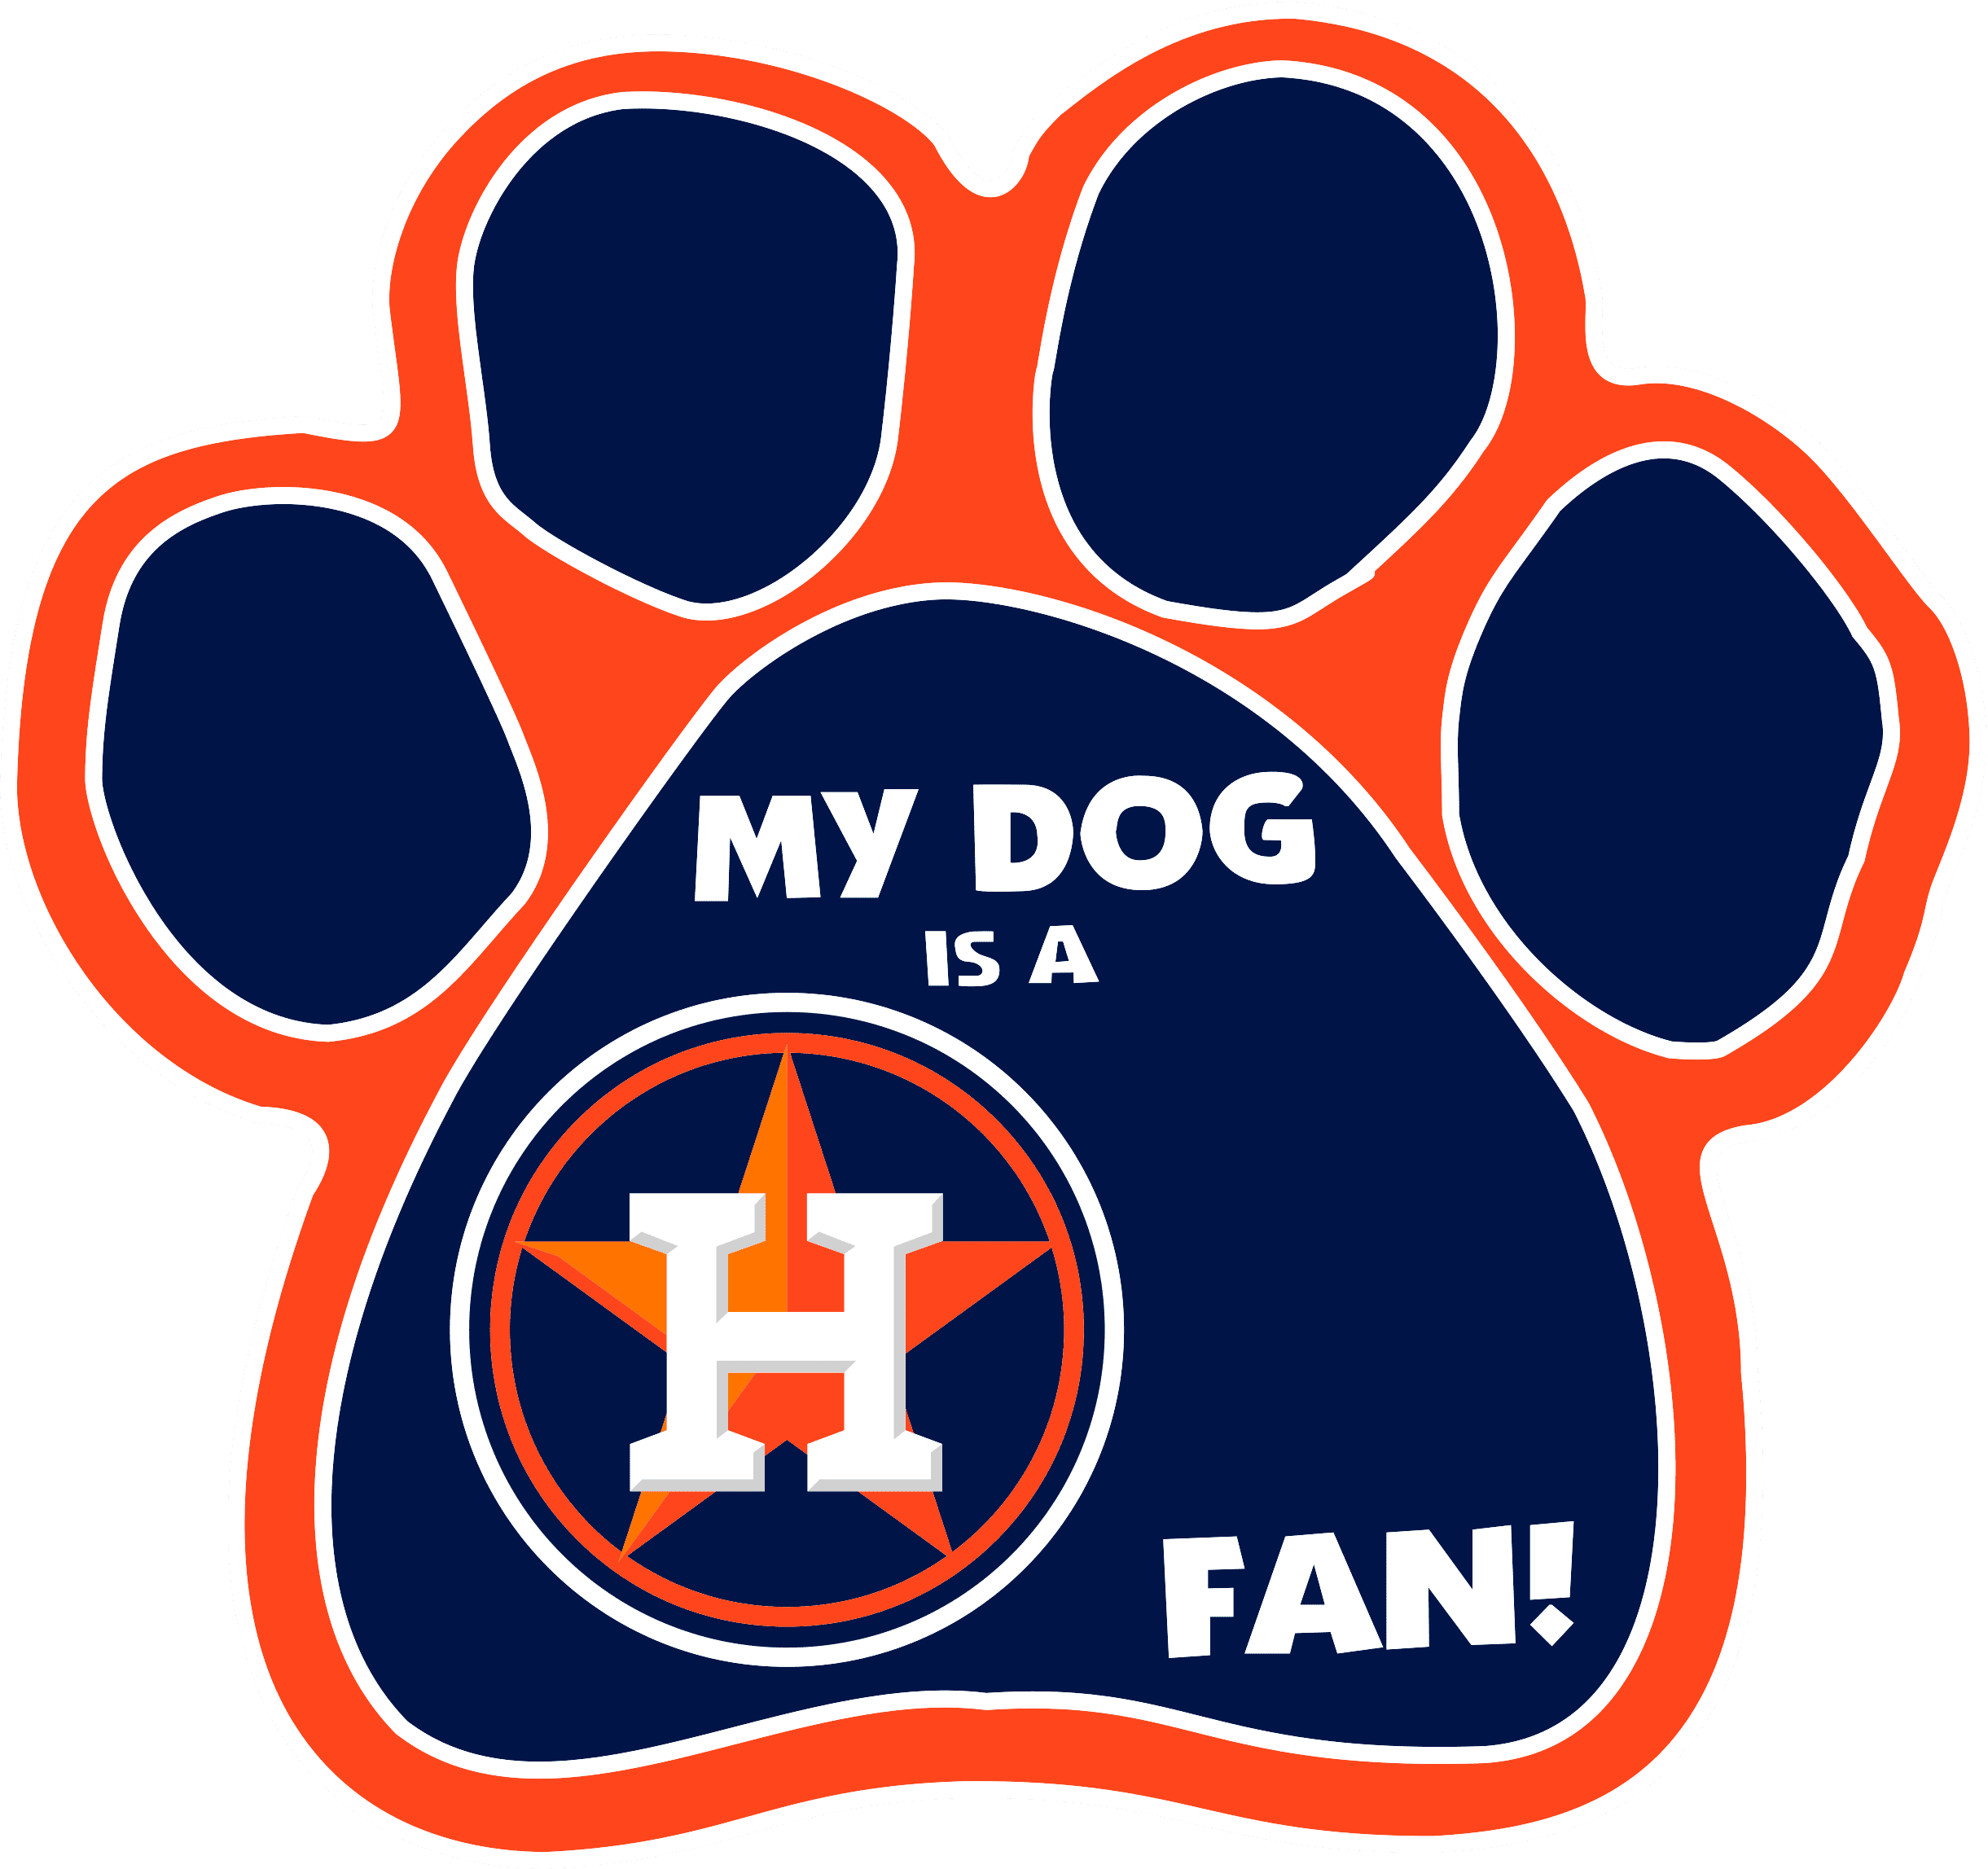 Houston Astros - 2000-2012, National League, Baseball Sports Vector / SVG  Logo in 5 formats